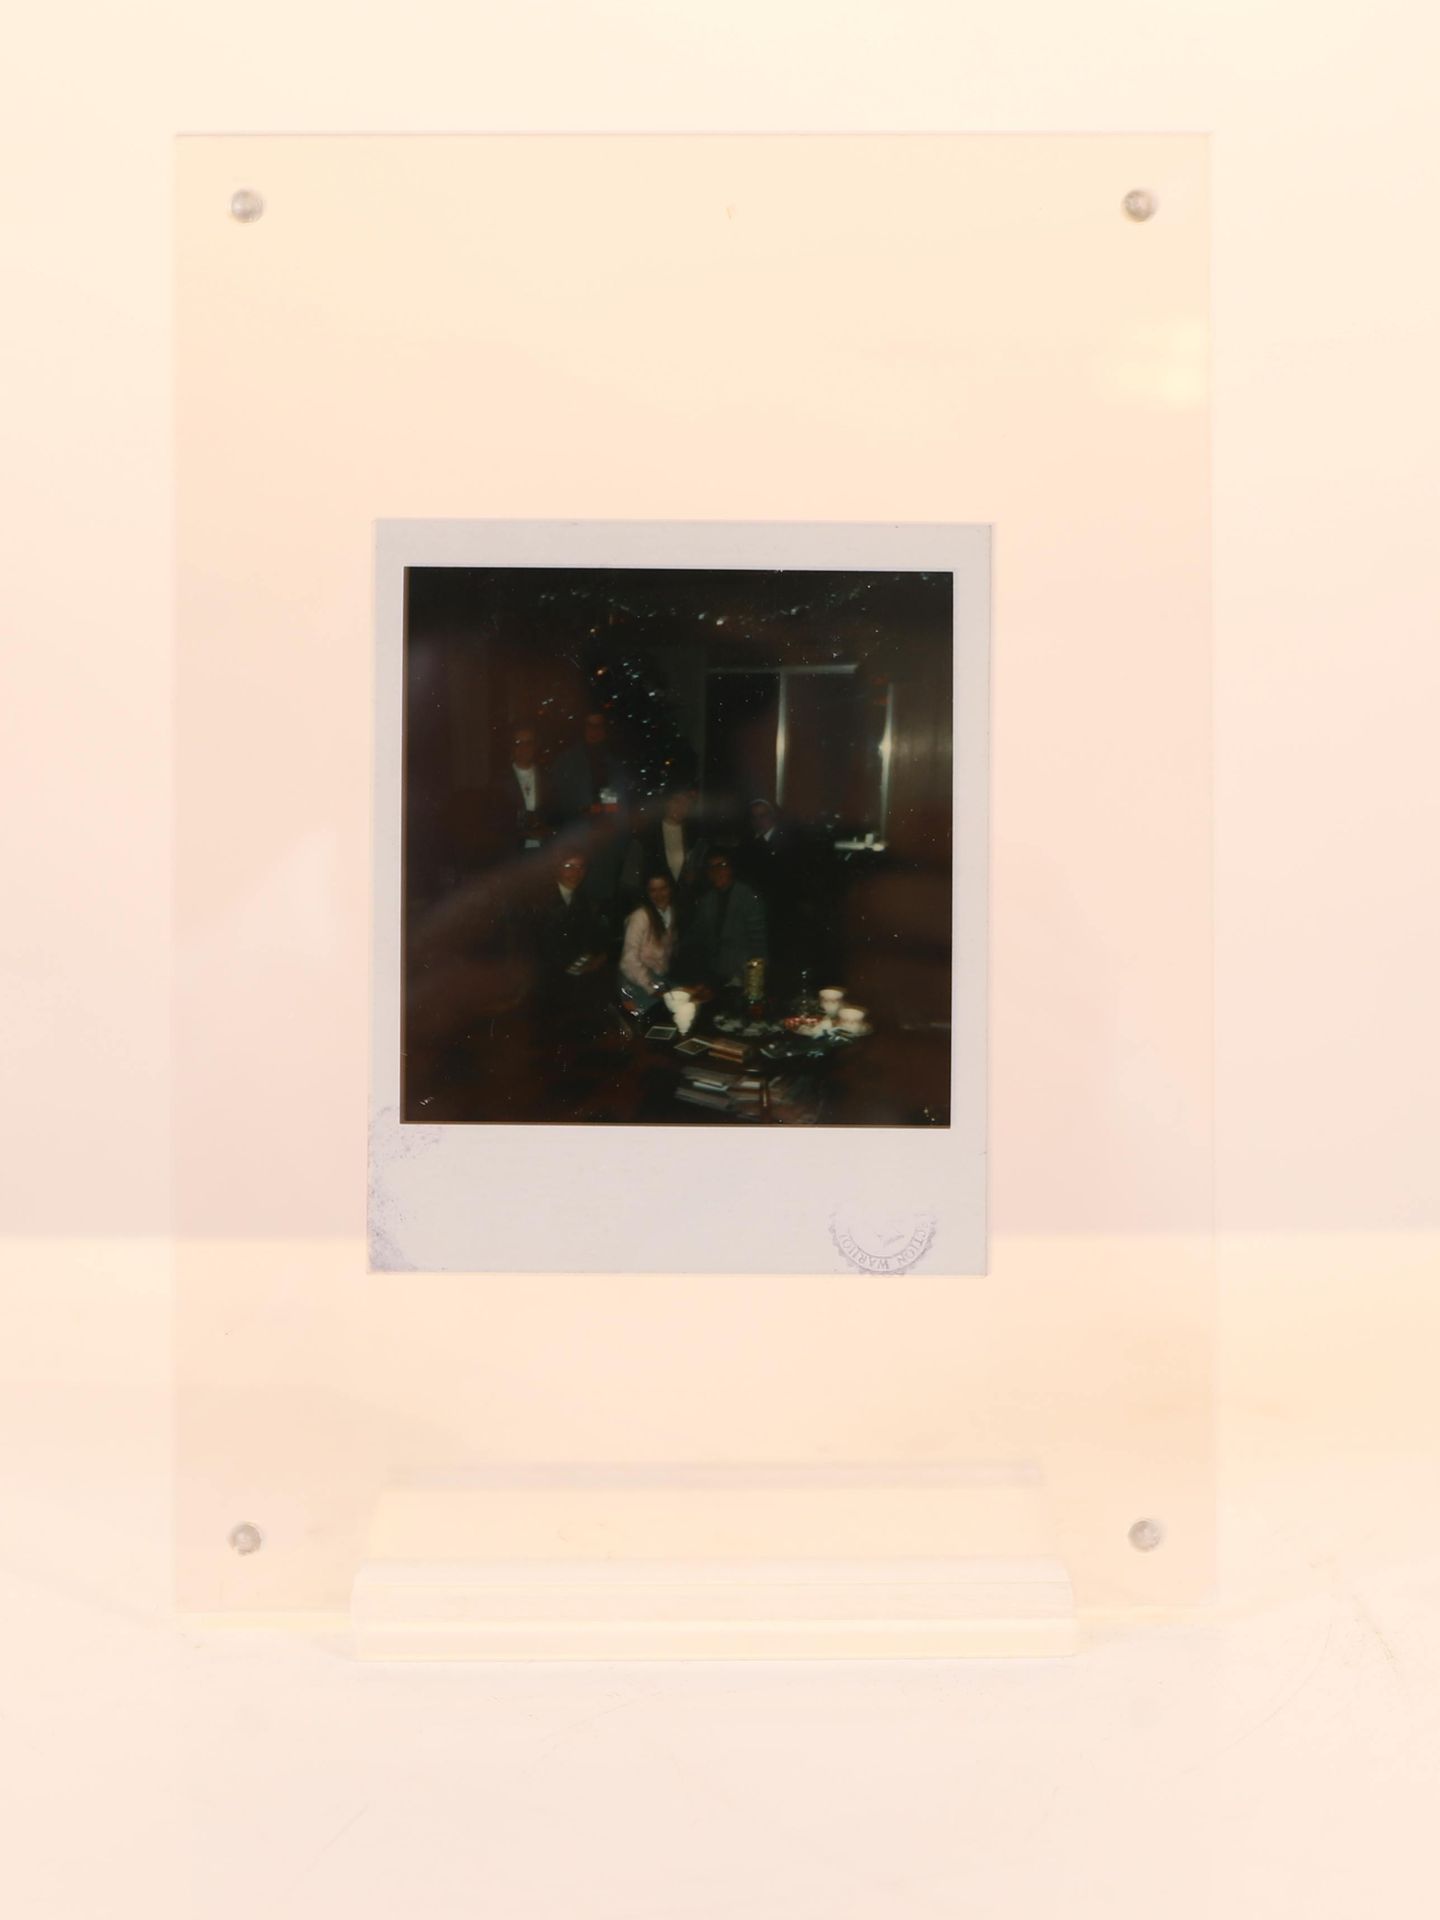 Null 安迪-沃霍尔(1928-1987)

带有 "安迪-沃霍尔 "印章的原始宝丽来照片。

尺寸：高：21；宽：15厘米